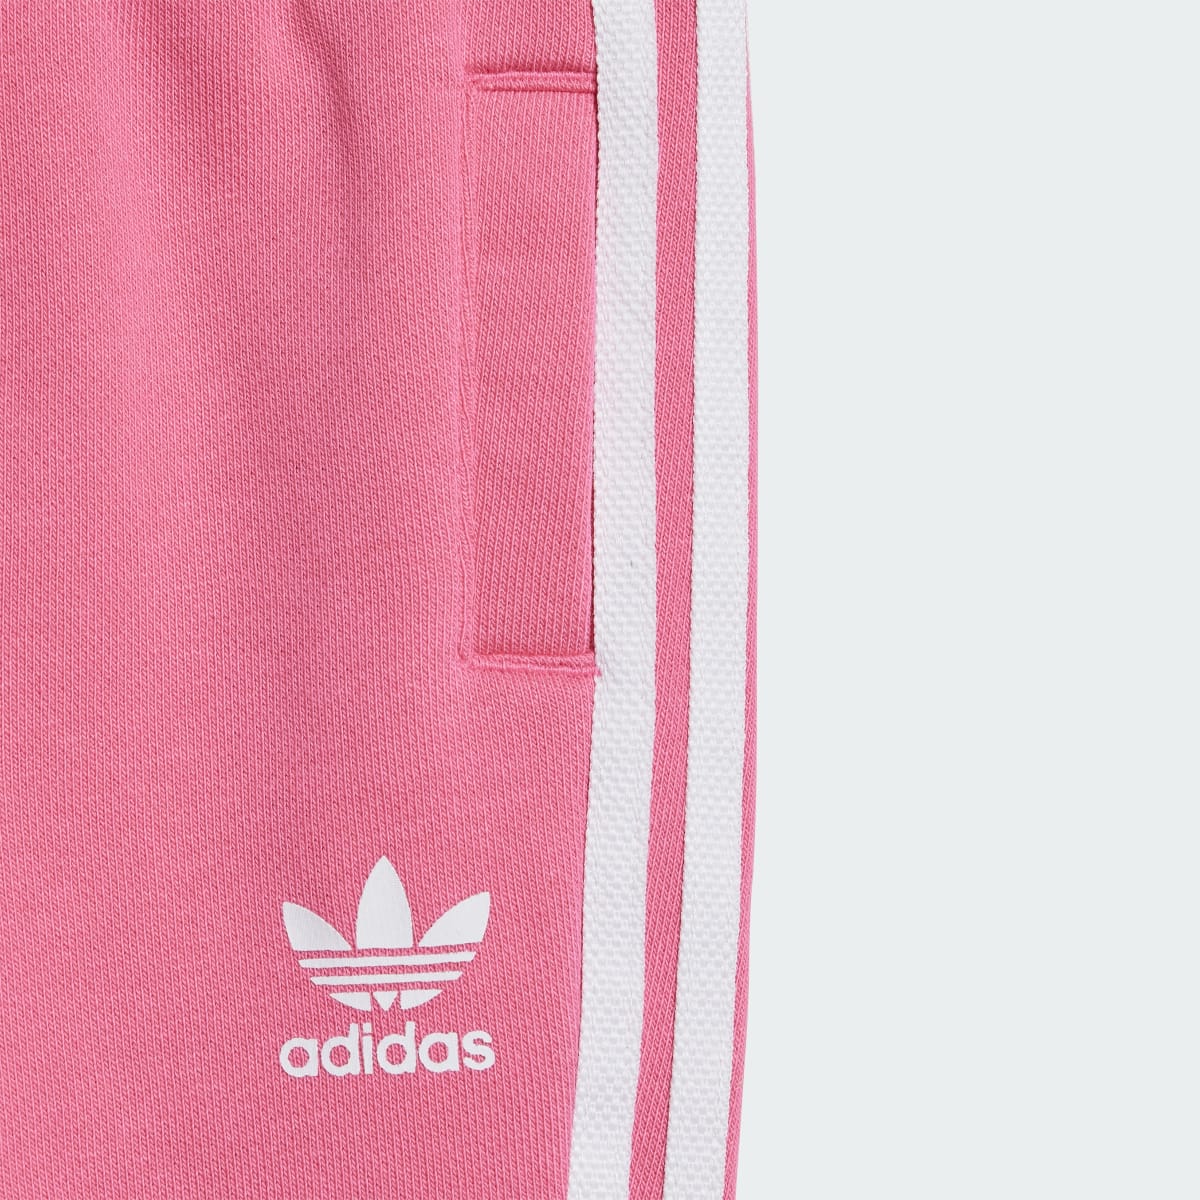 Adidas Crew Sweatshirt Set. 9